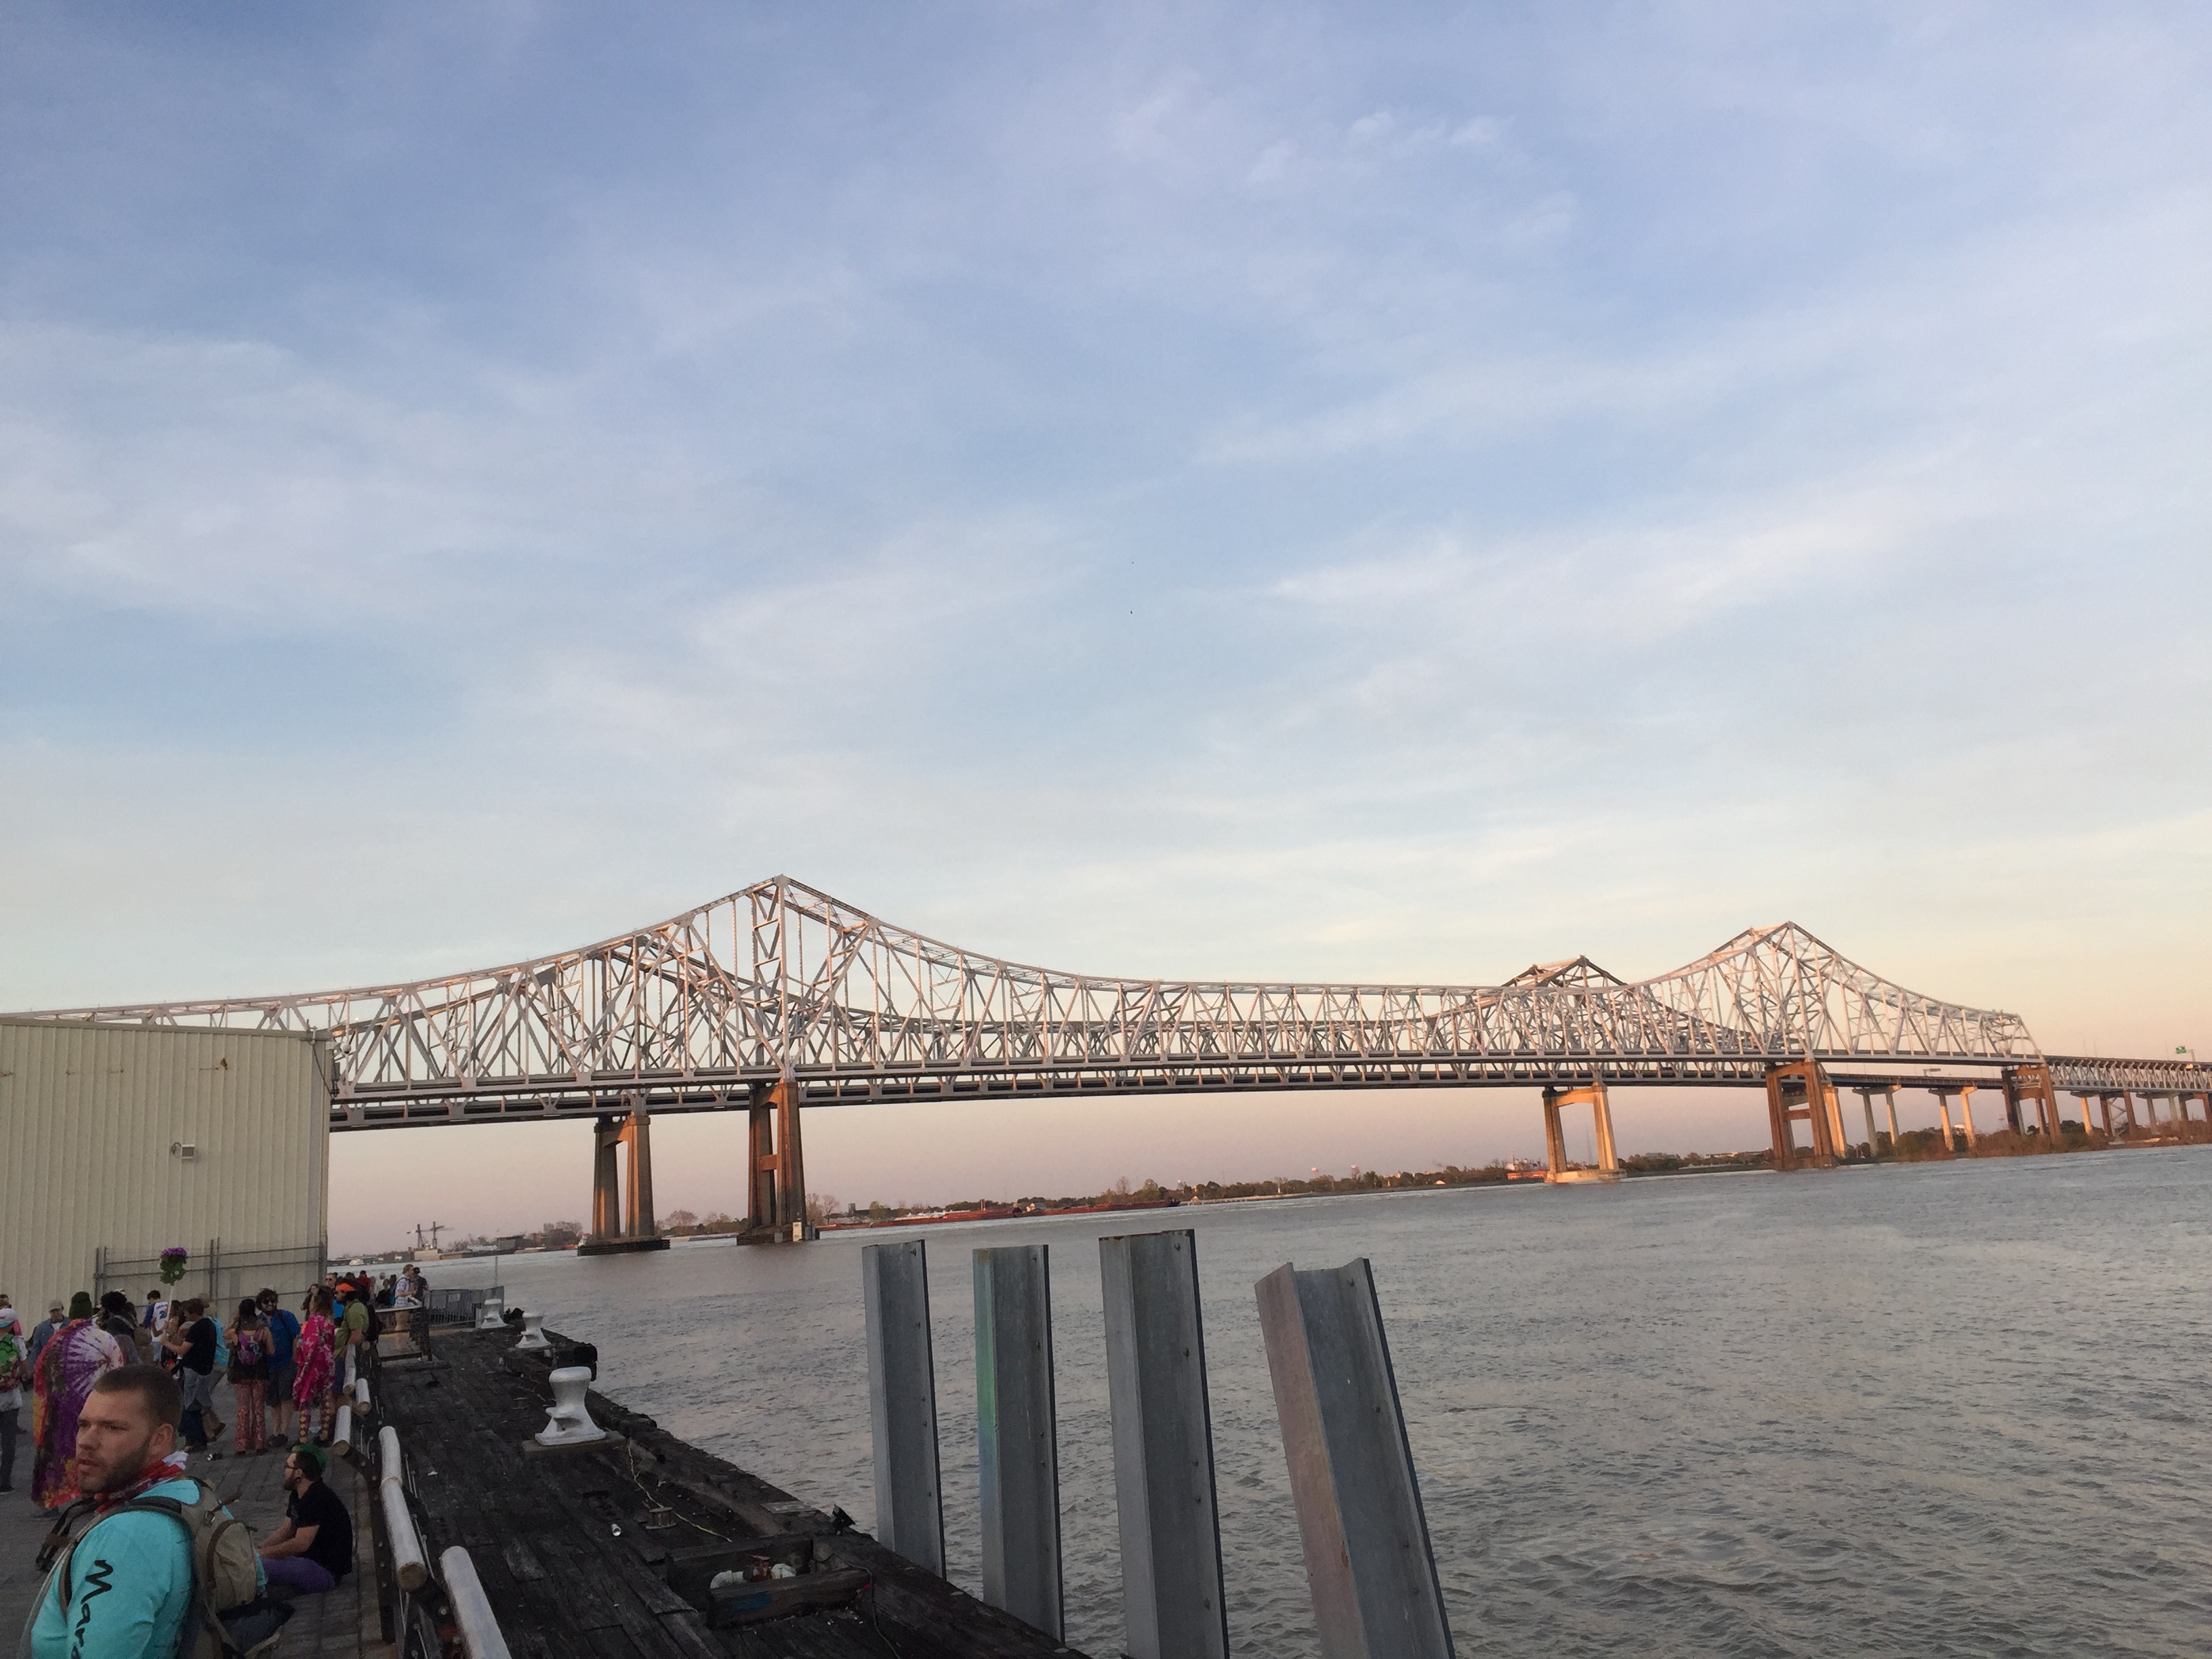 The bridge in New Orleans